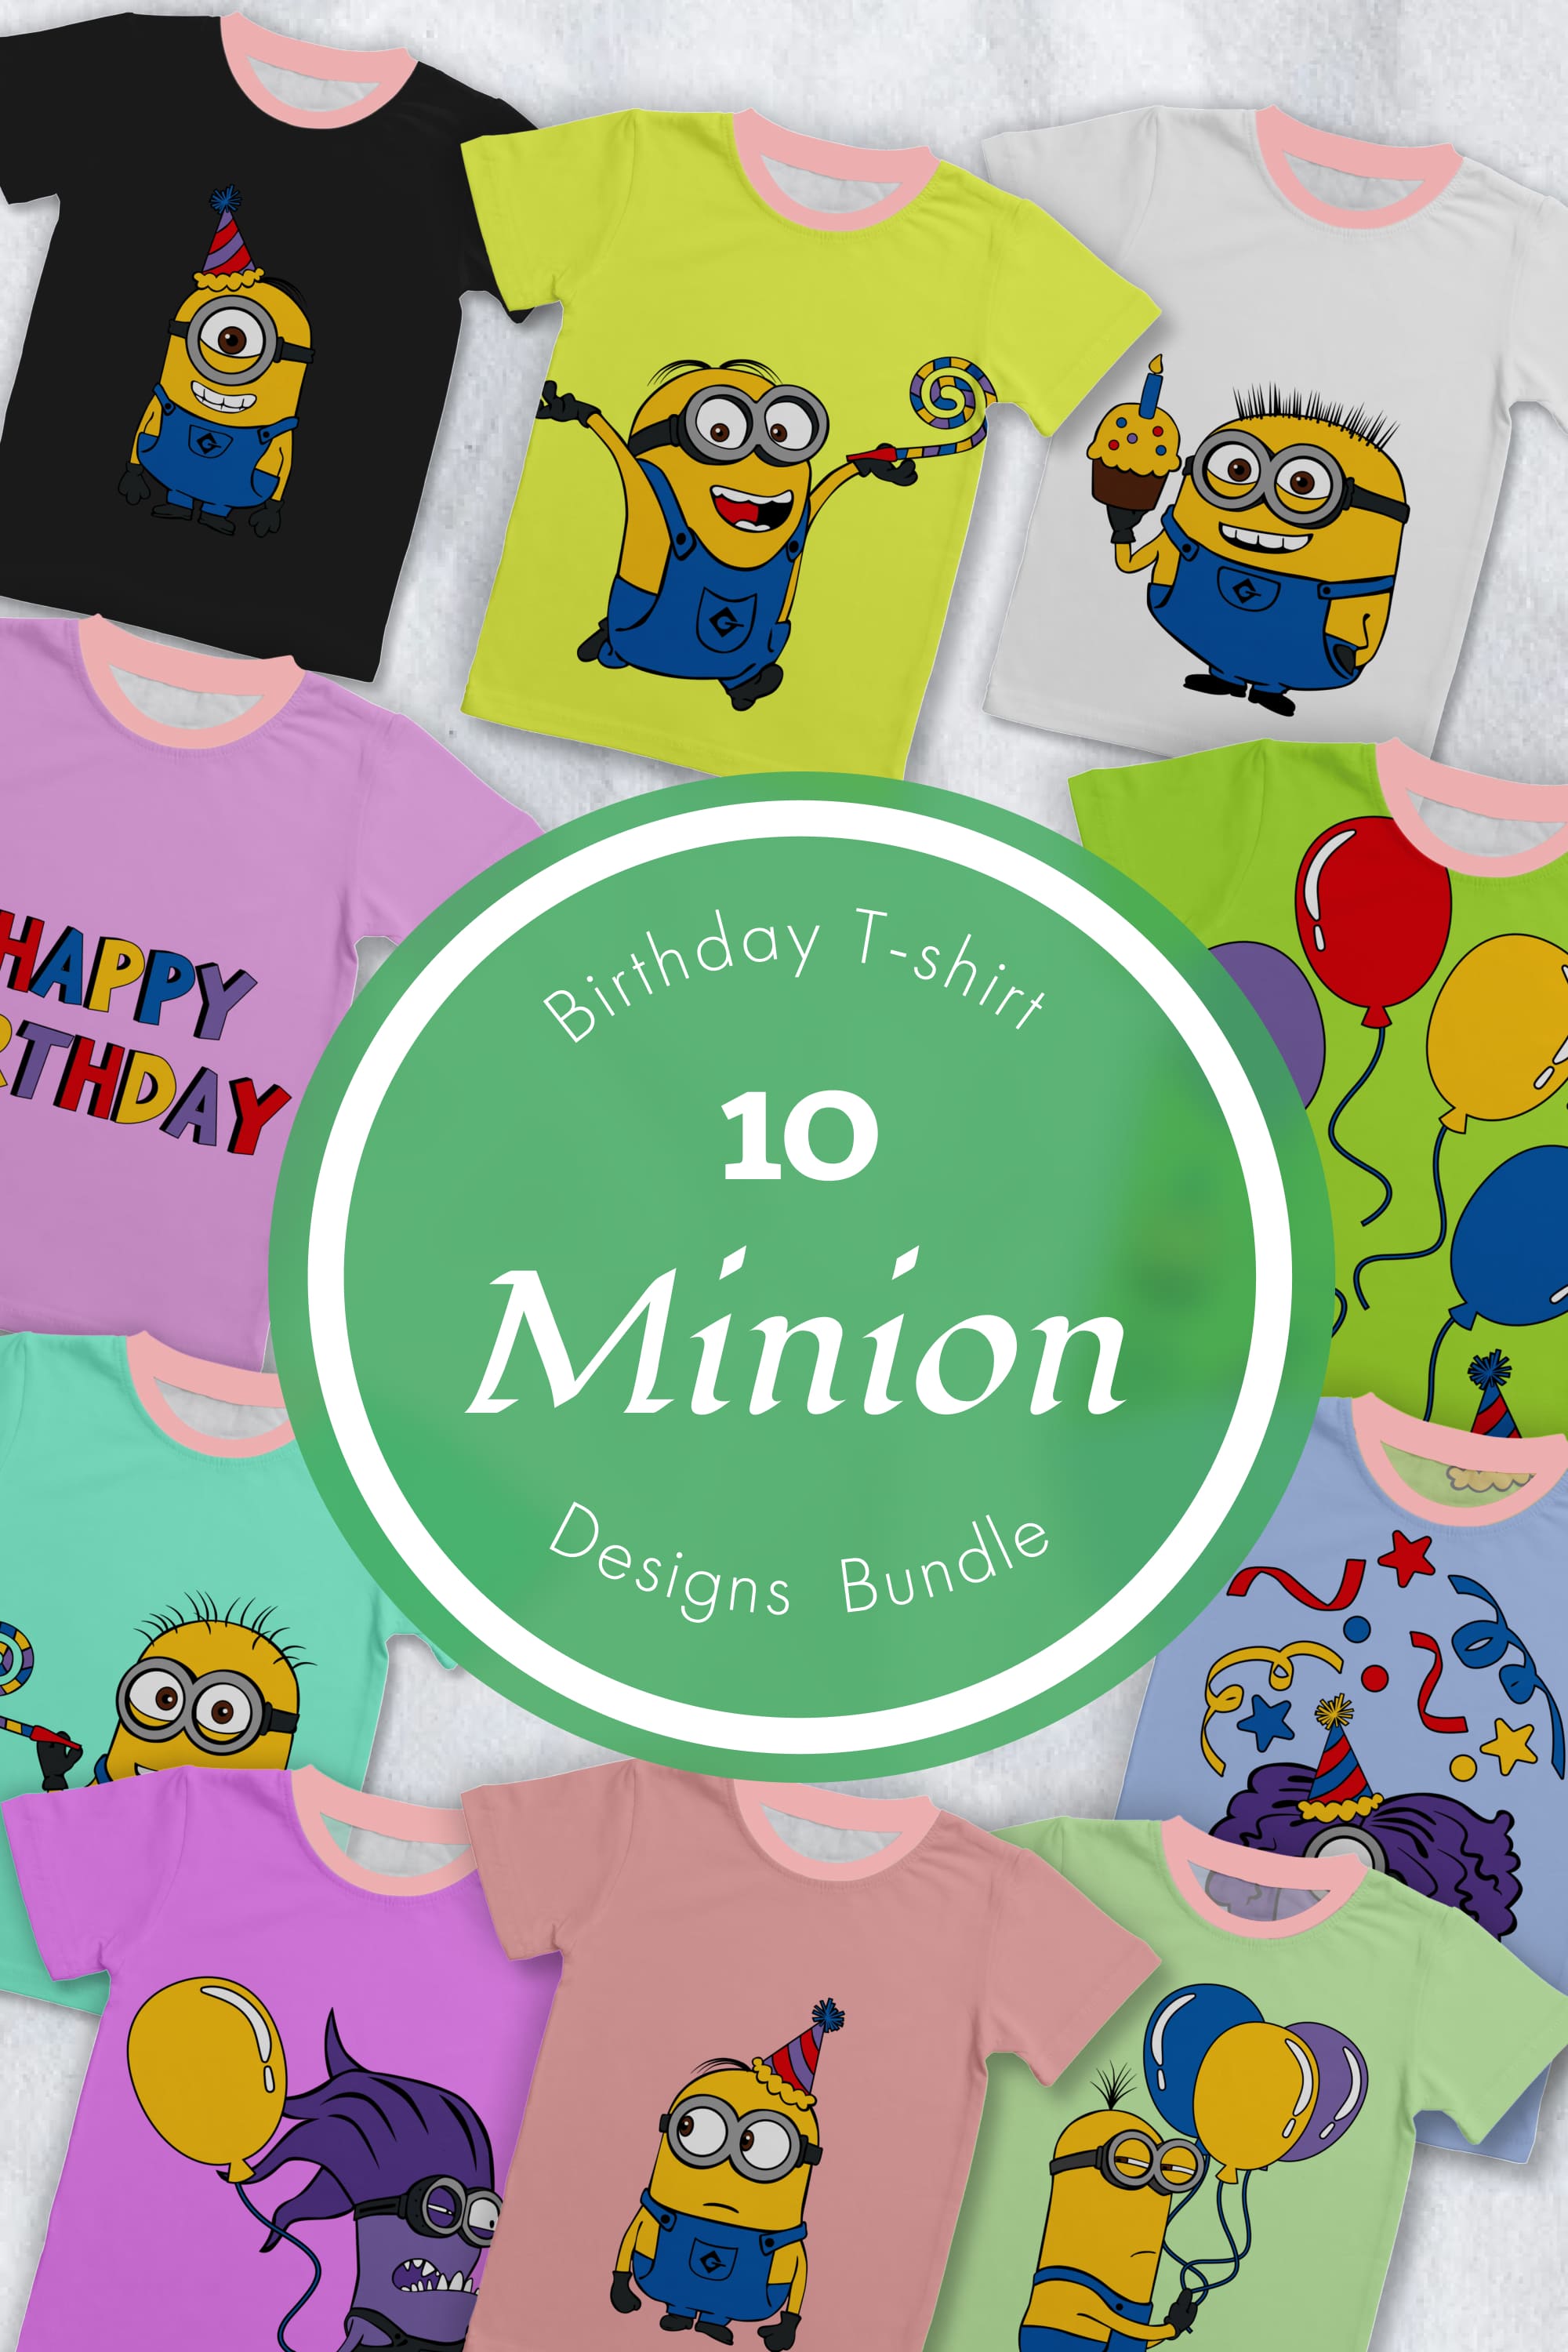 Minion Birthday T-shirt Designs - Pinterest.